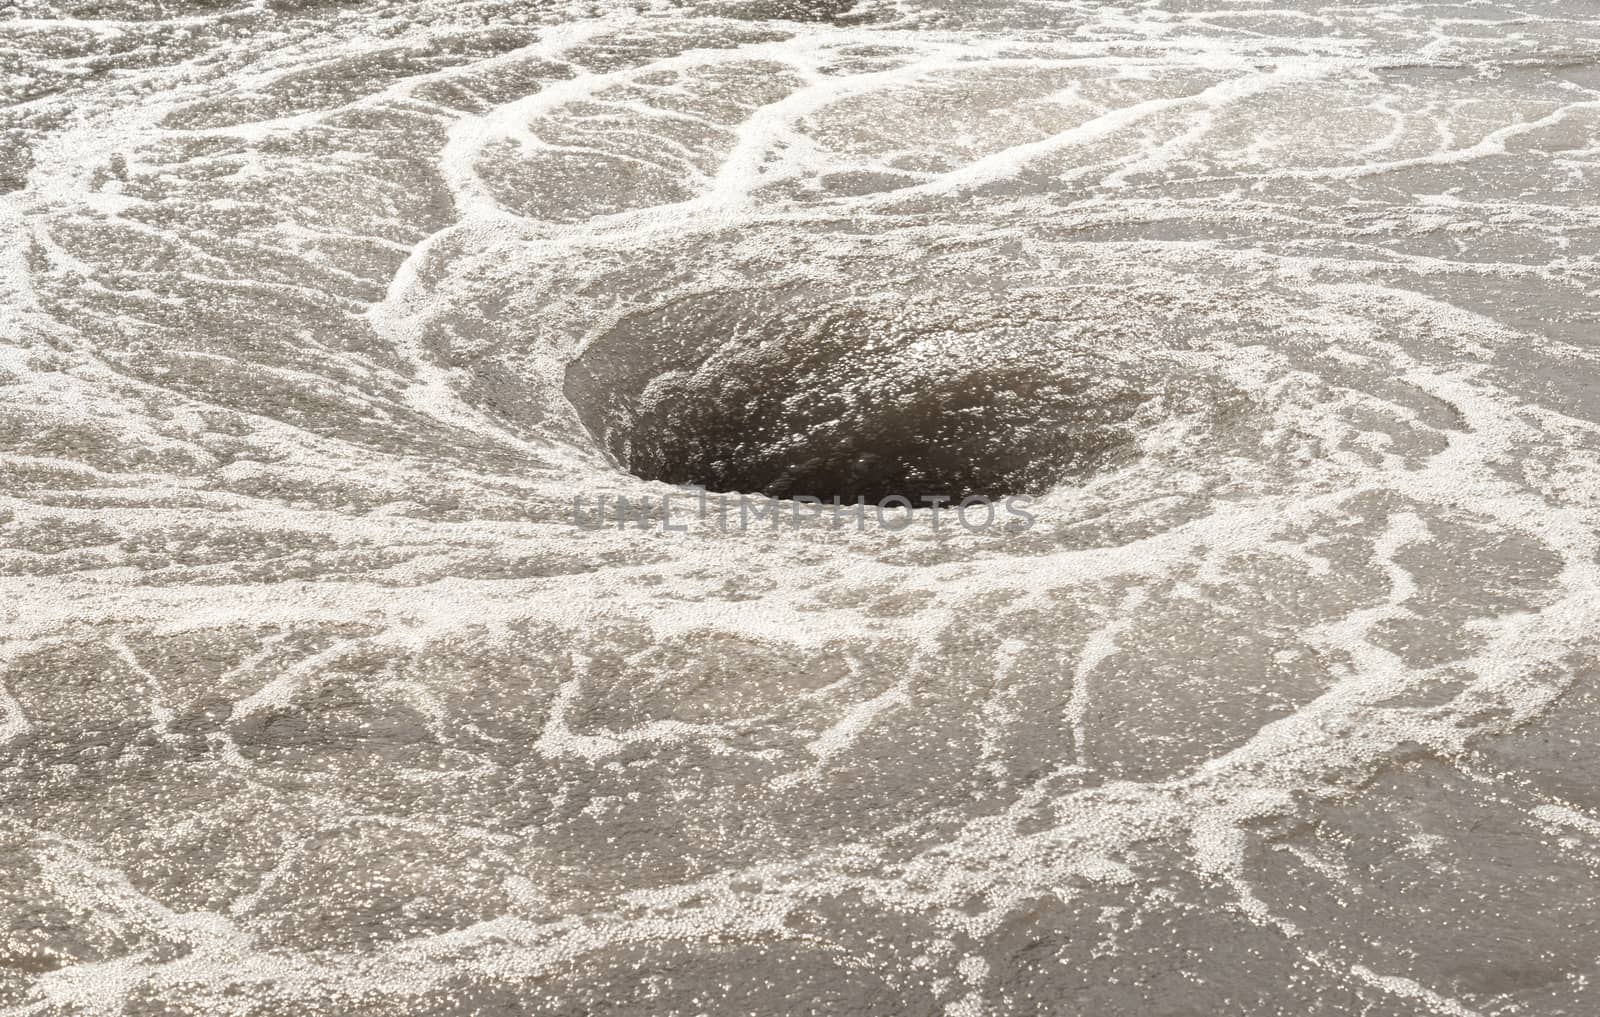 Large water whirlpool